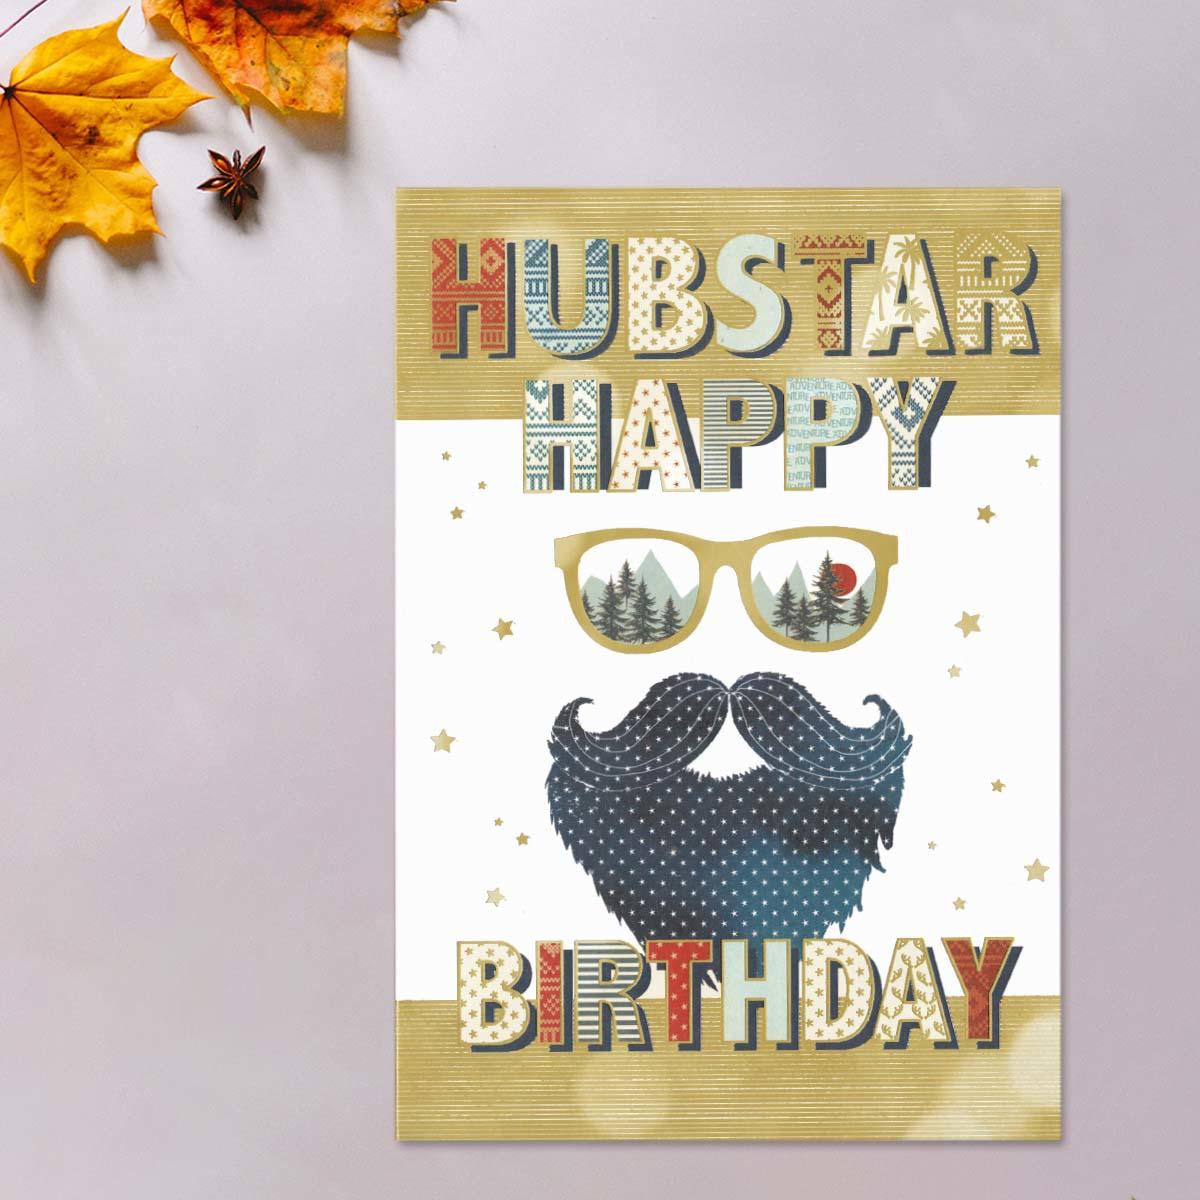 Husbstar Happy Birthday Card Front Image